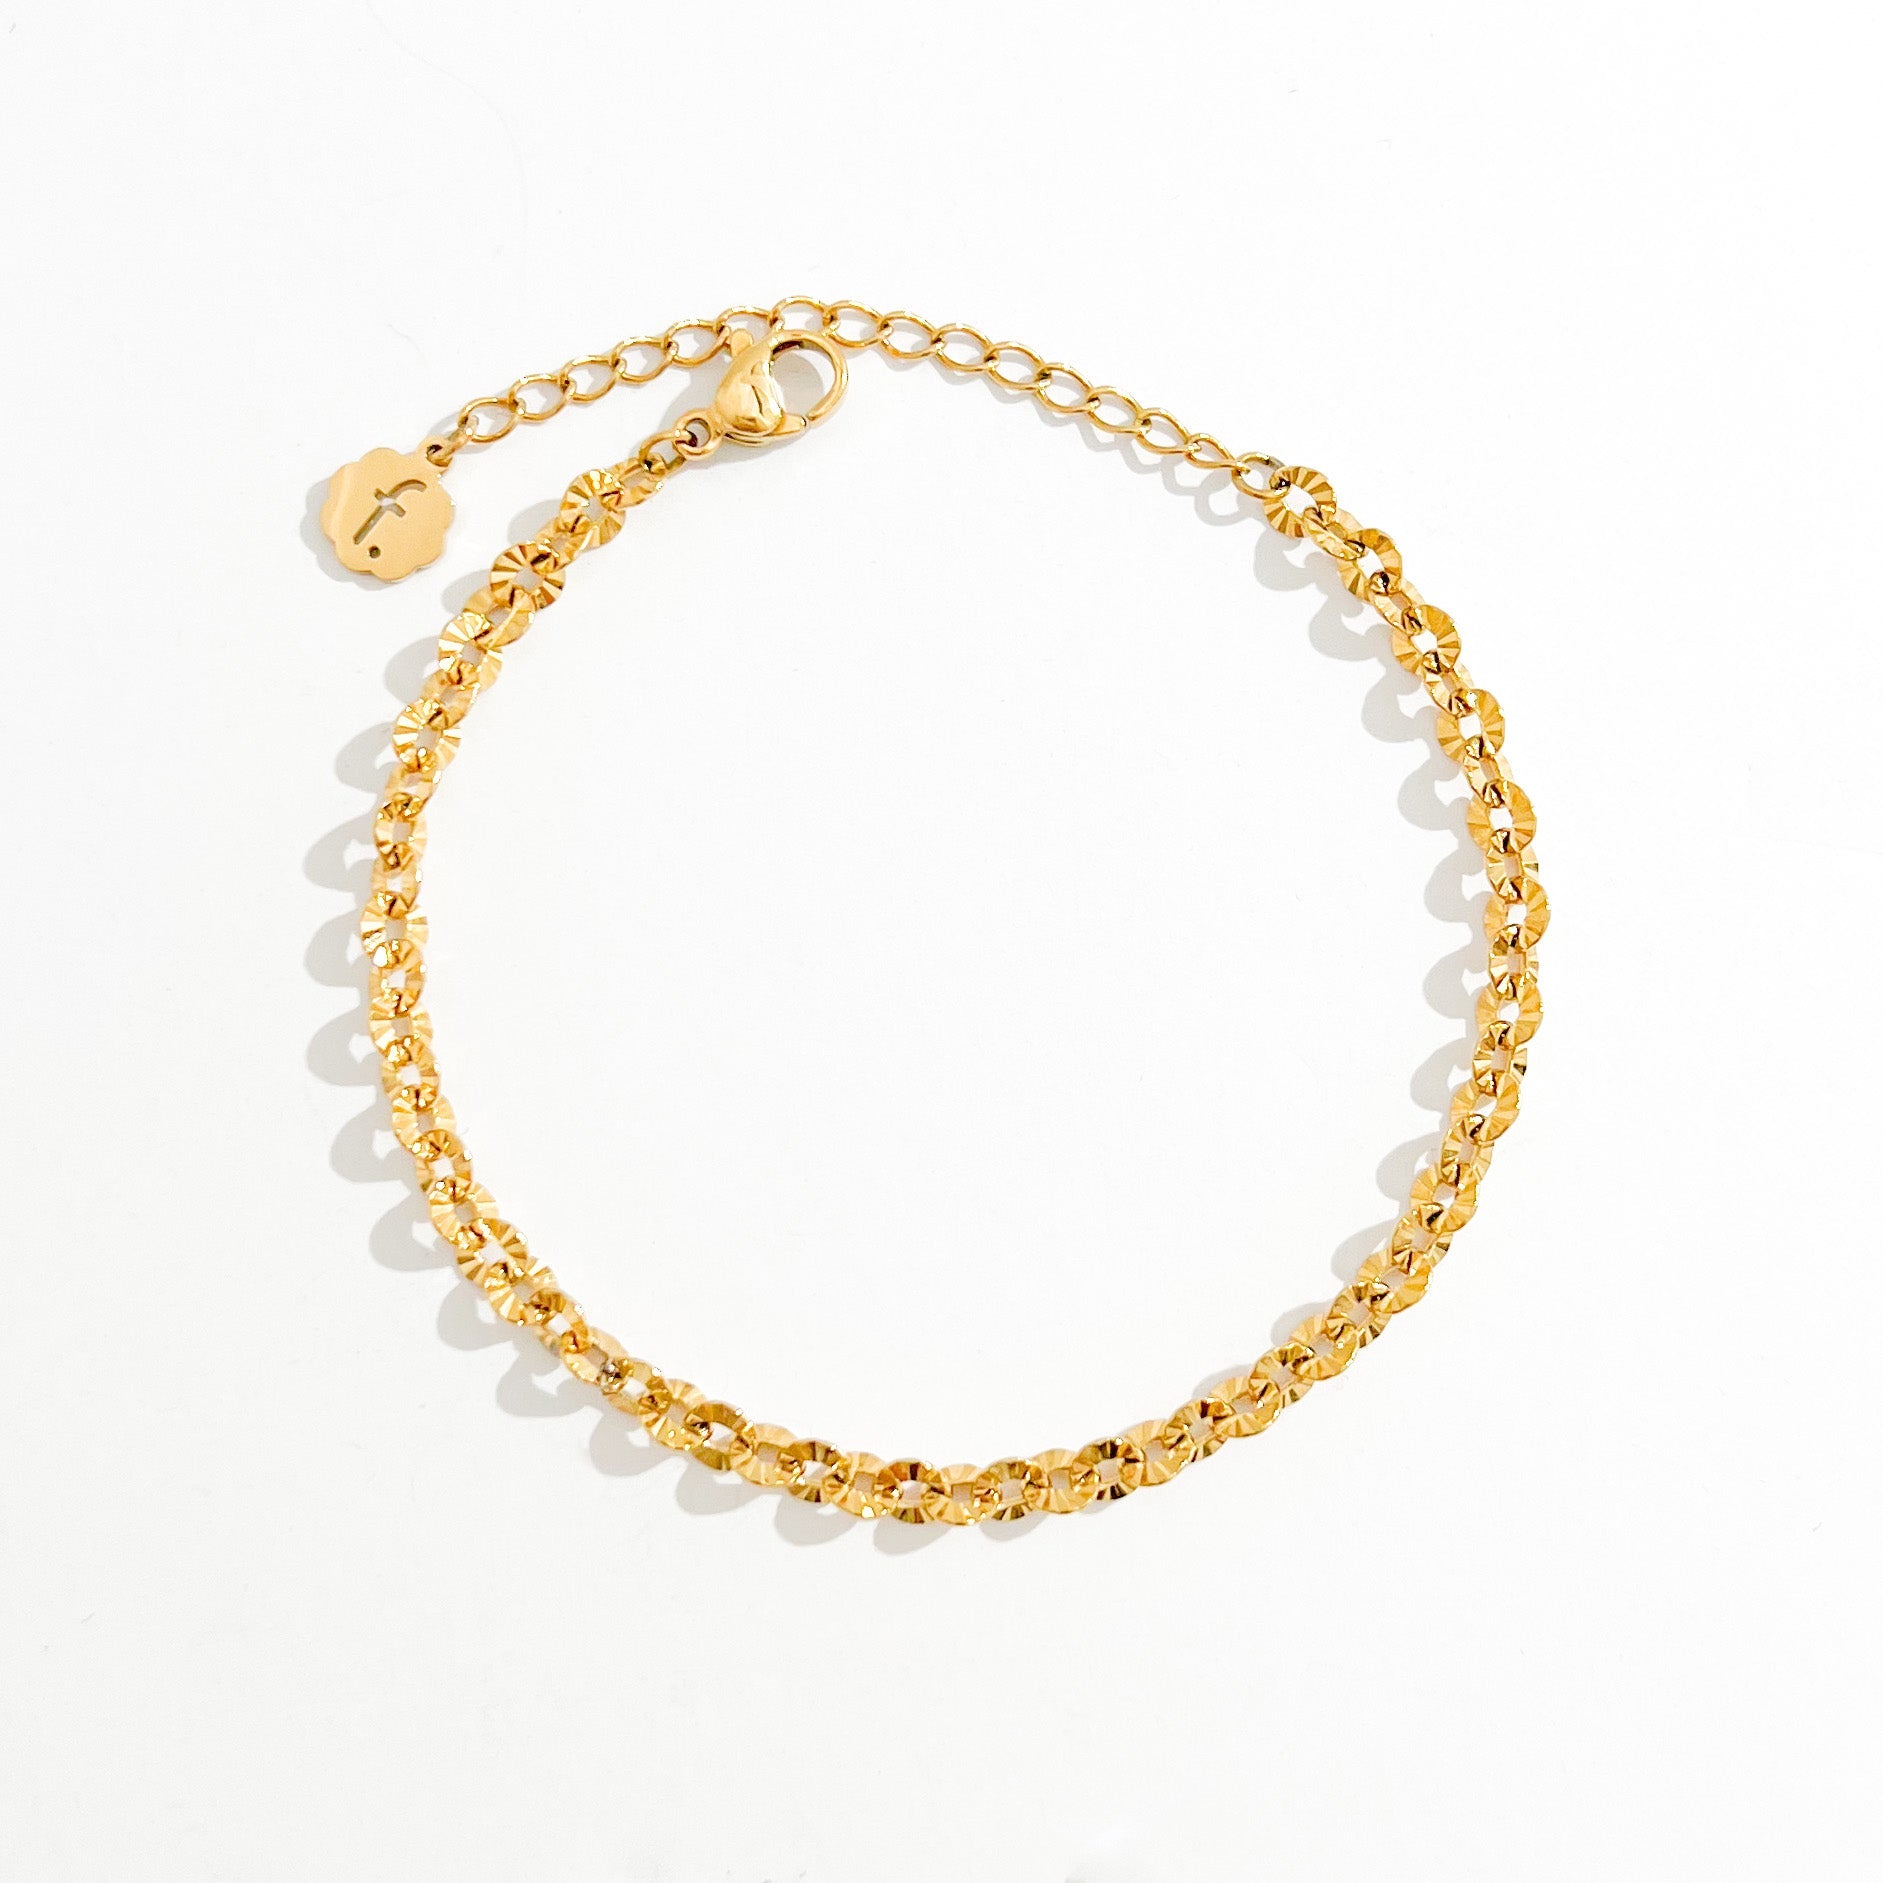 Hollow Sunburst Bracelet in Gold - Flaire & Co.